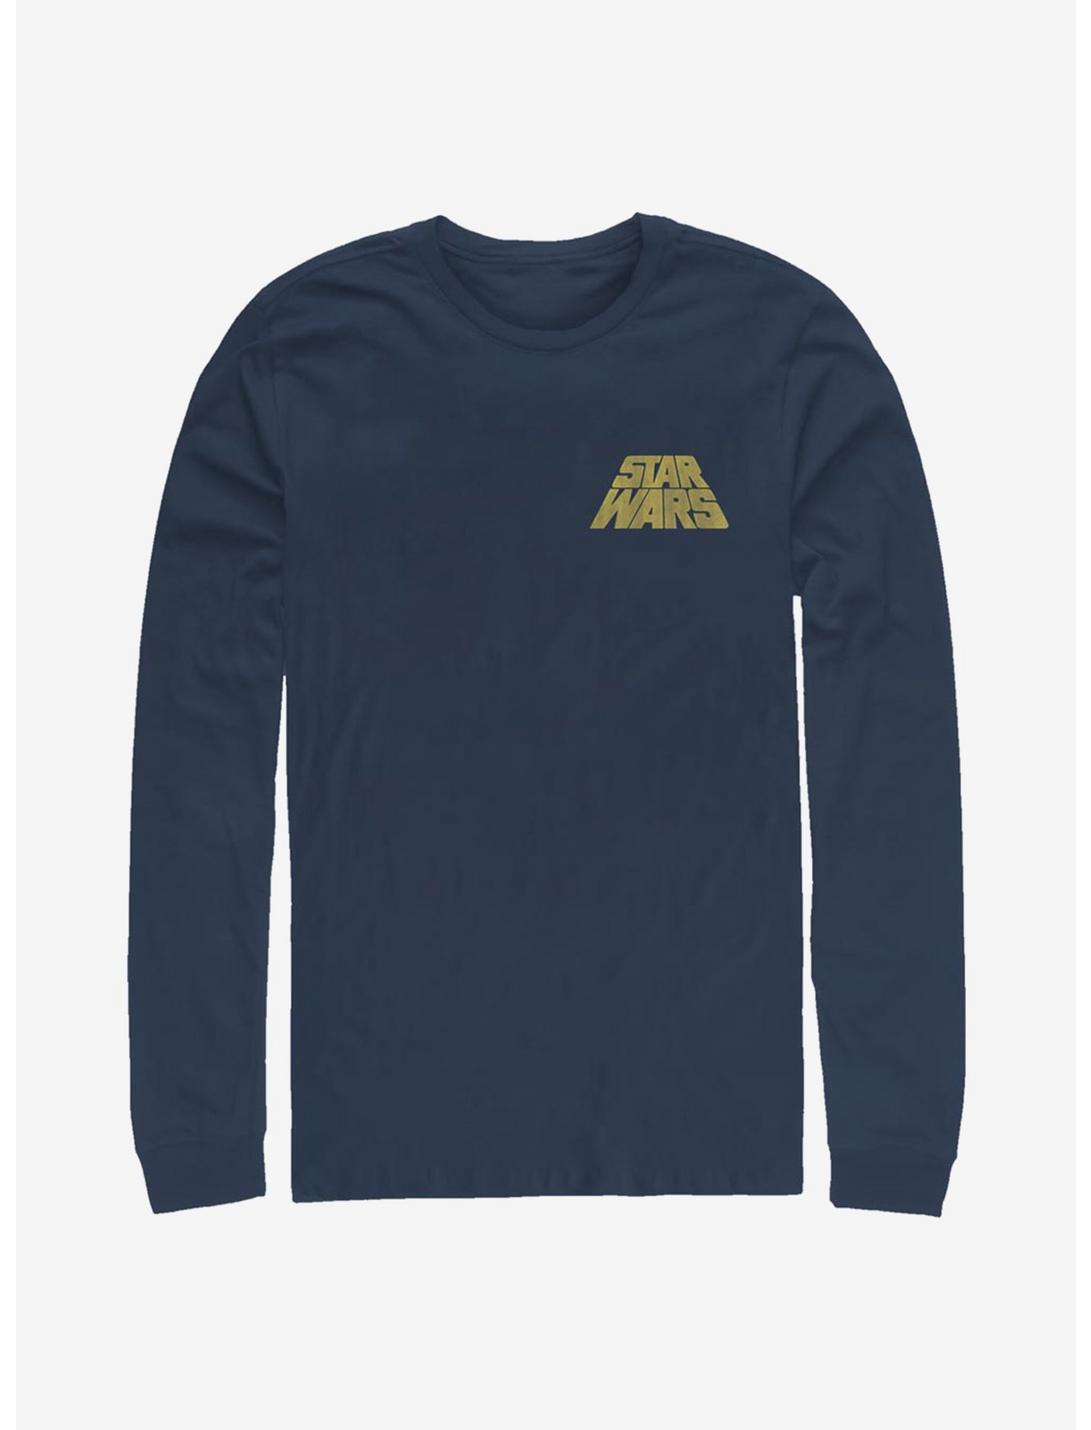 Star Wars Distressed Slant Logo Long-Sleeve T-Shirt, NAVY, hi-res